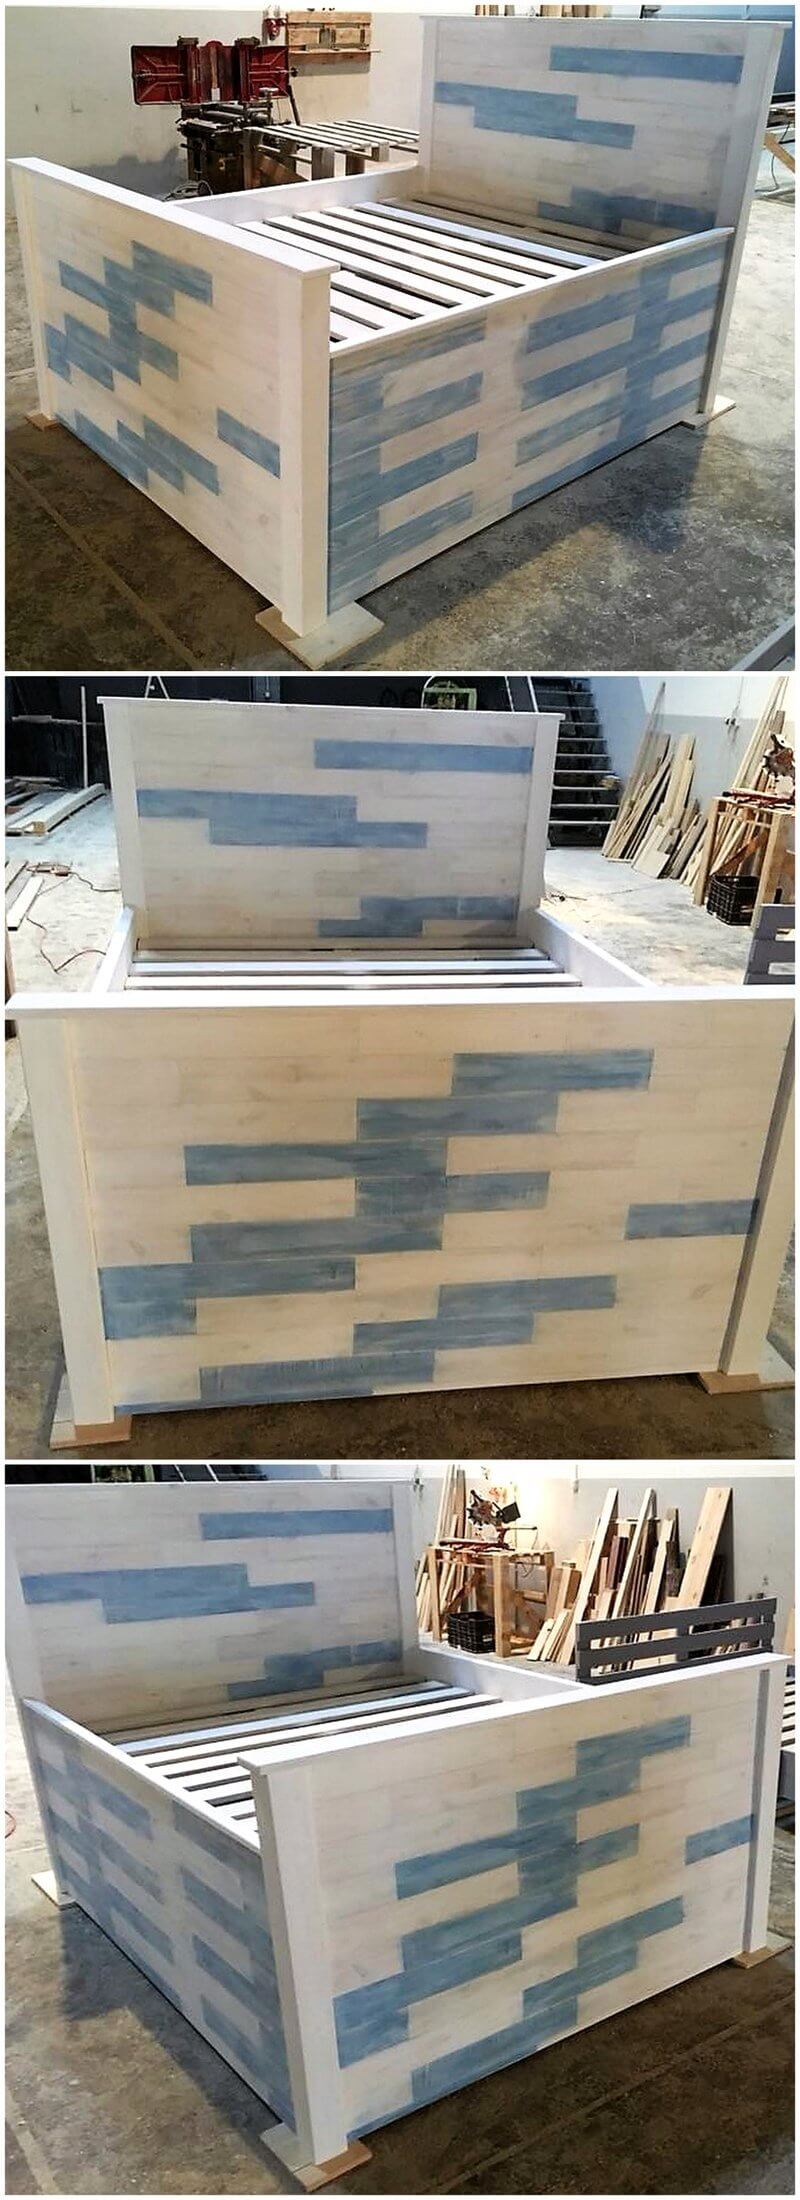 repurposed wooden pallet bed plan